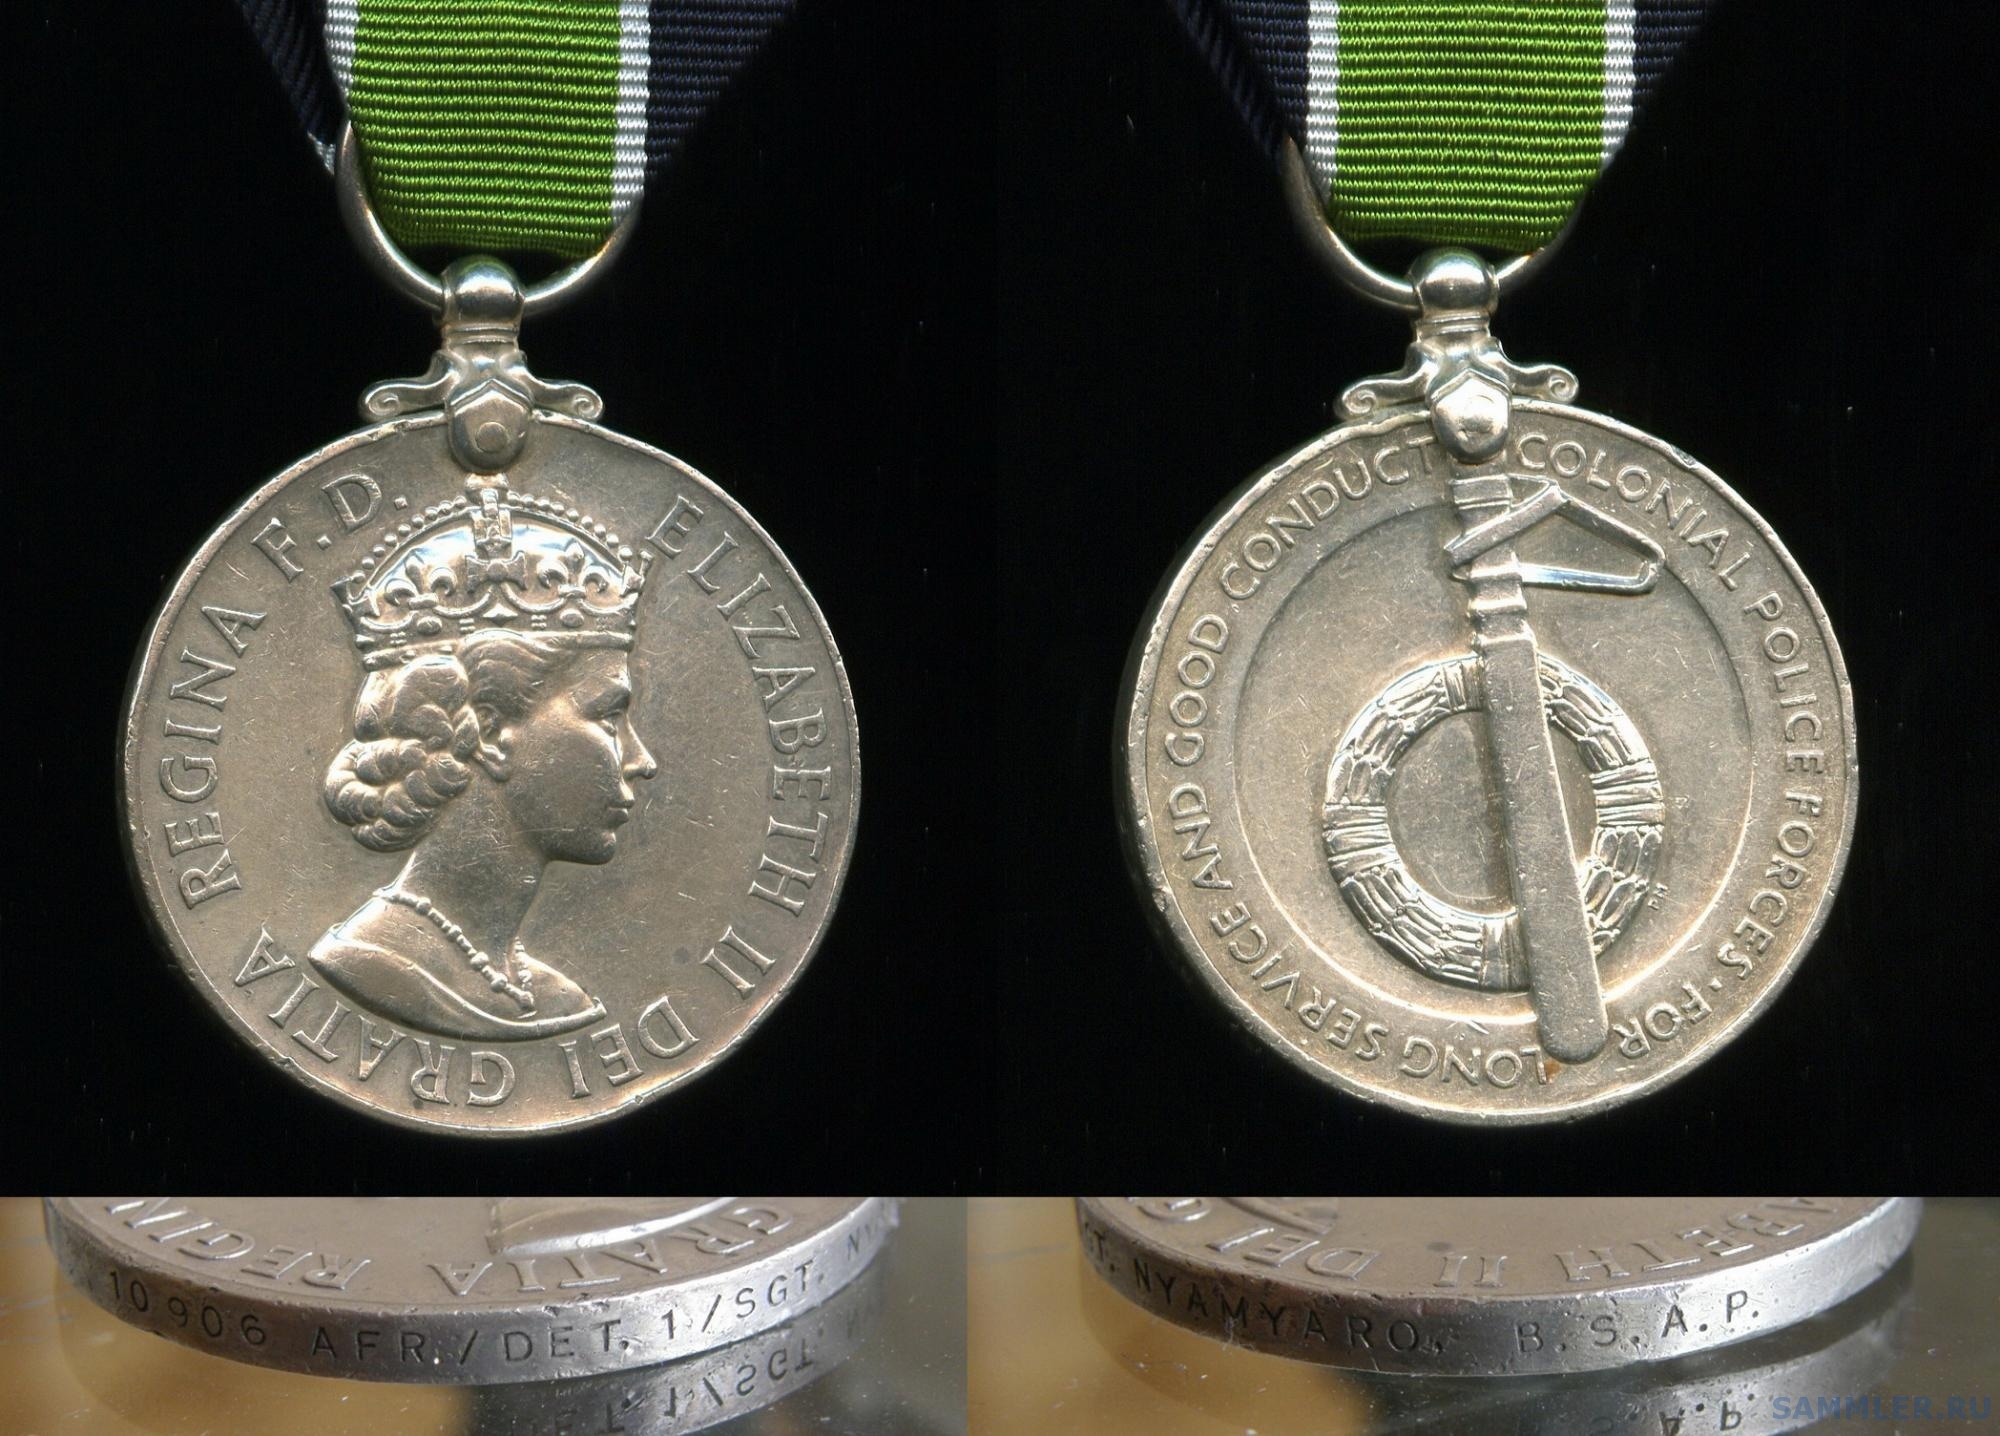 Colonial Police LS Medal to 10906 AFR.DET.1. SGT.NYAMYARO.B.S.A.P. (4).jpg